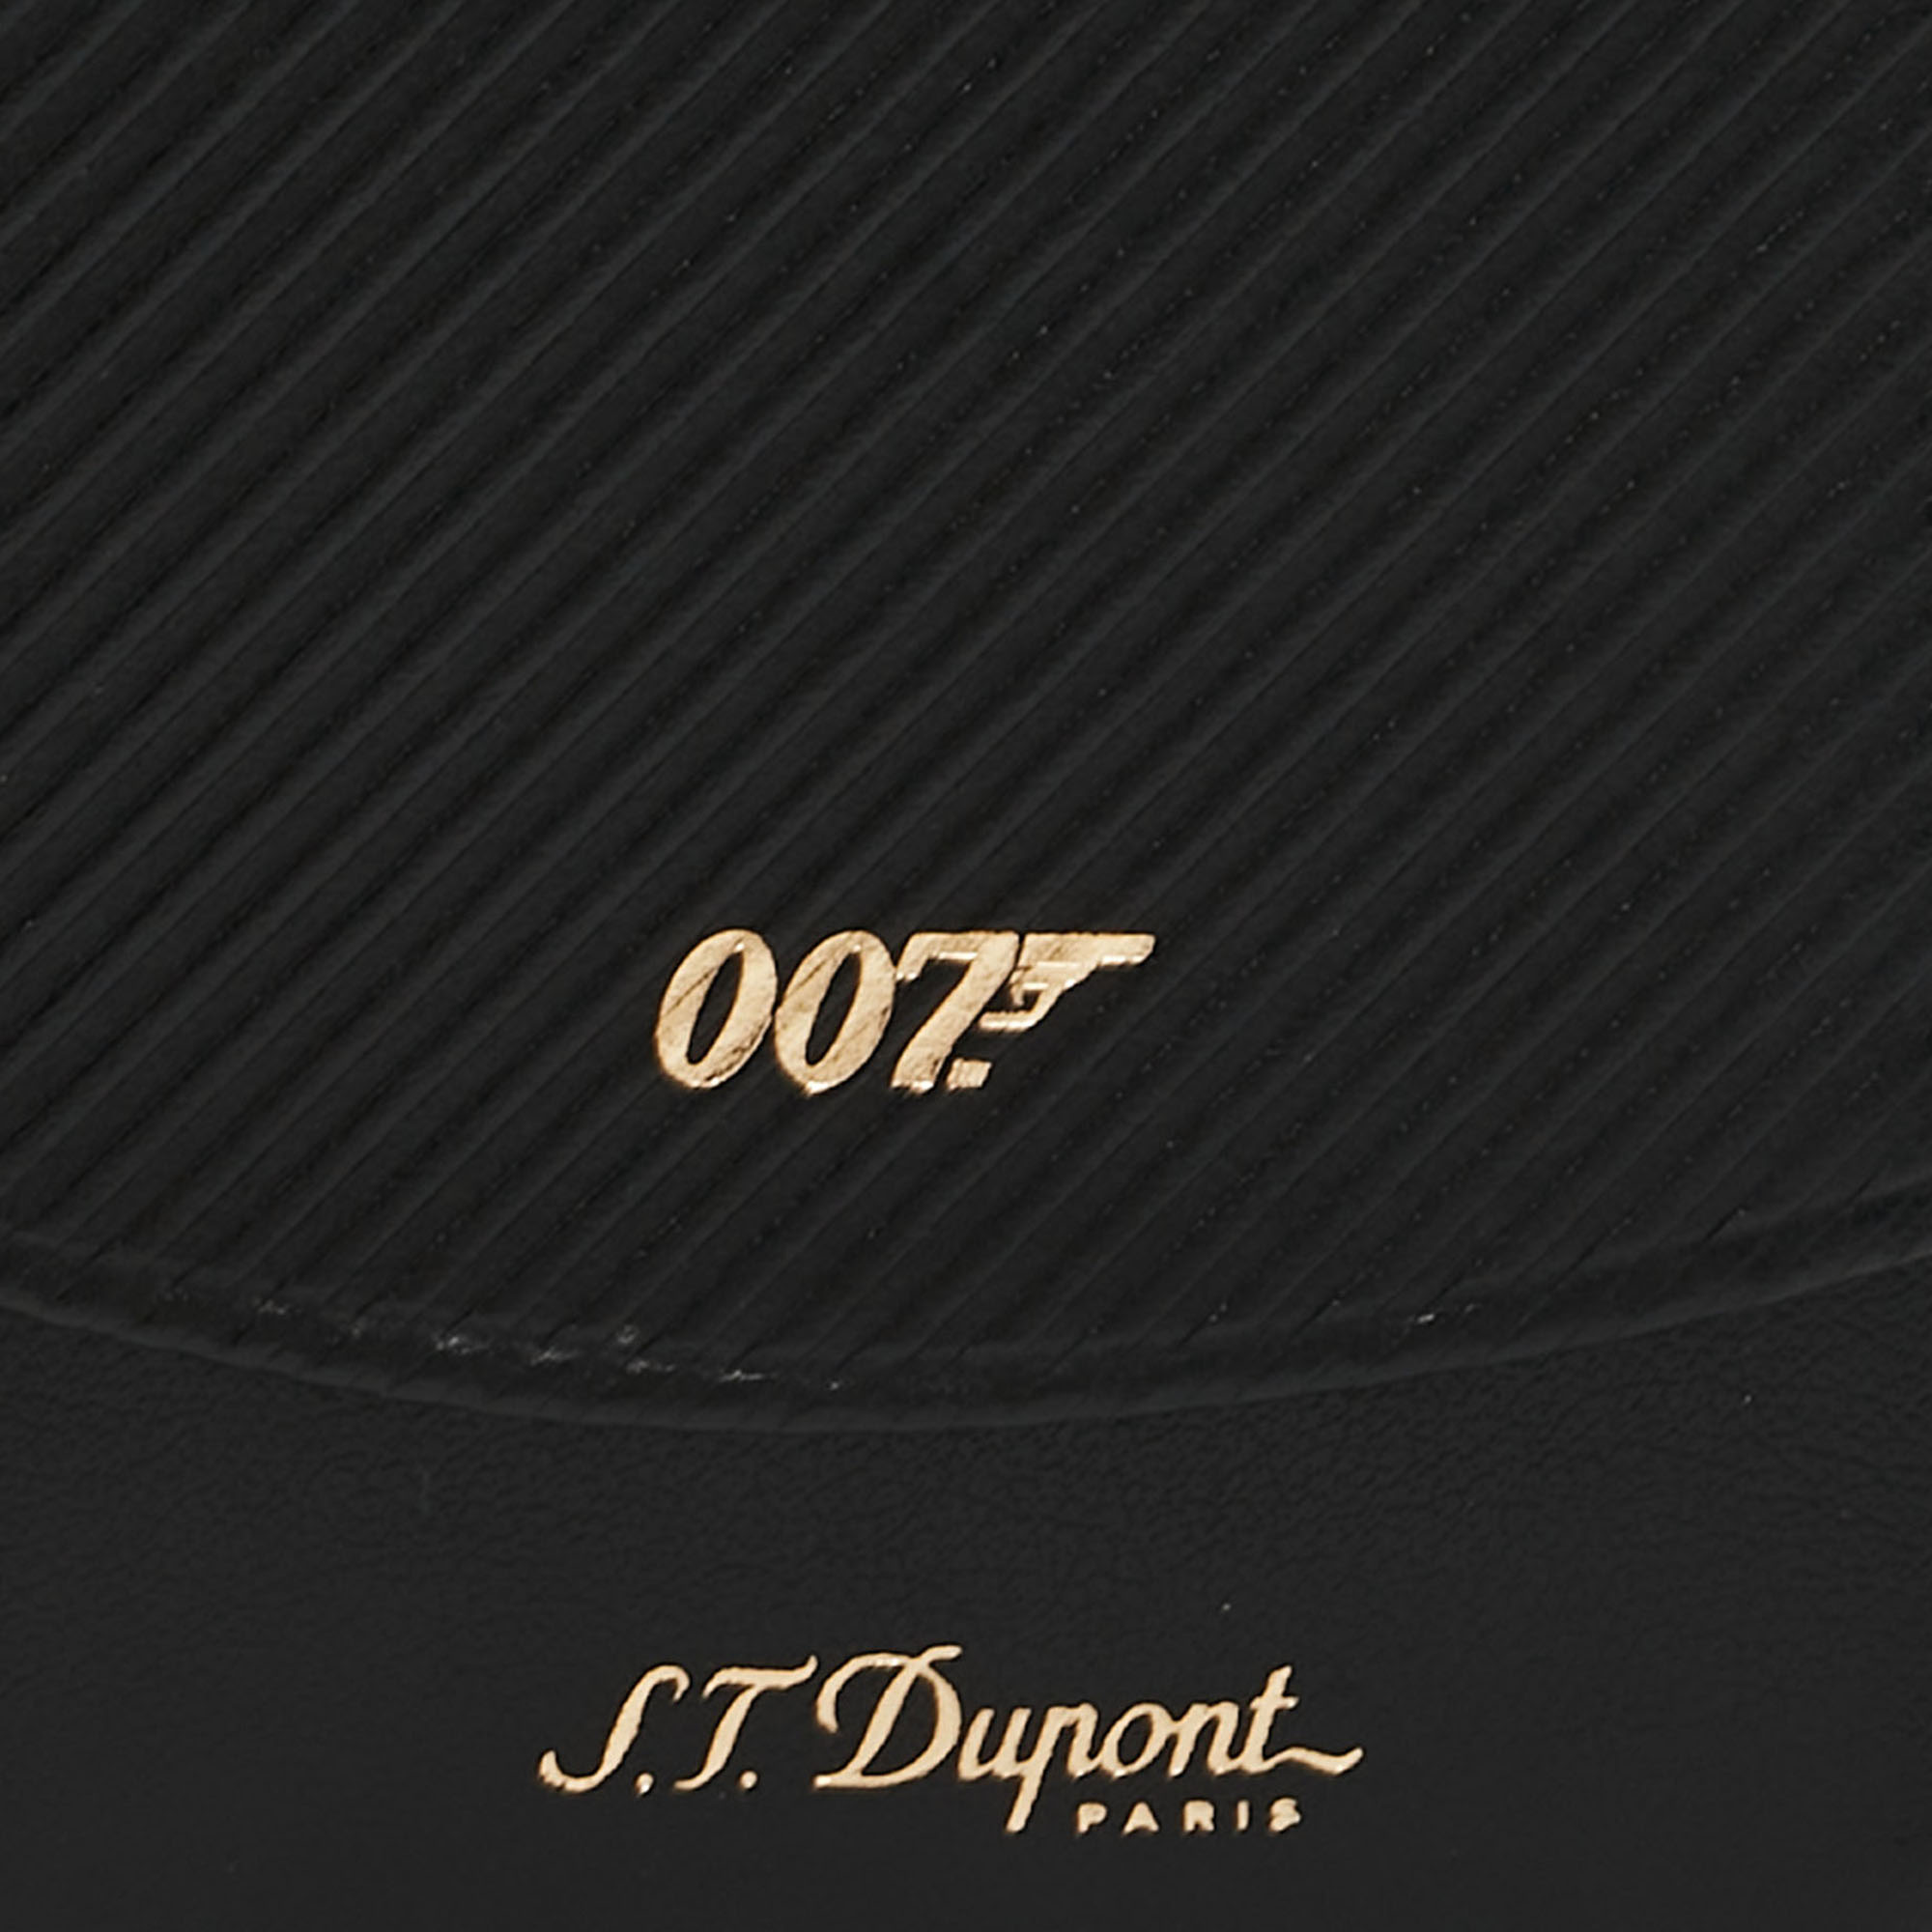 S.T. Dupont Black Leather James Bond 007 Cigarette Case